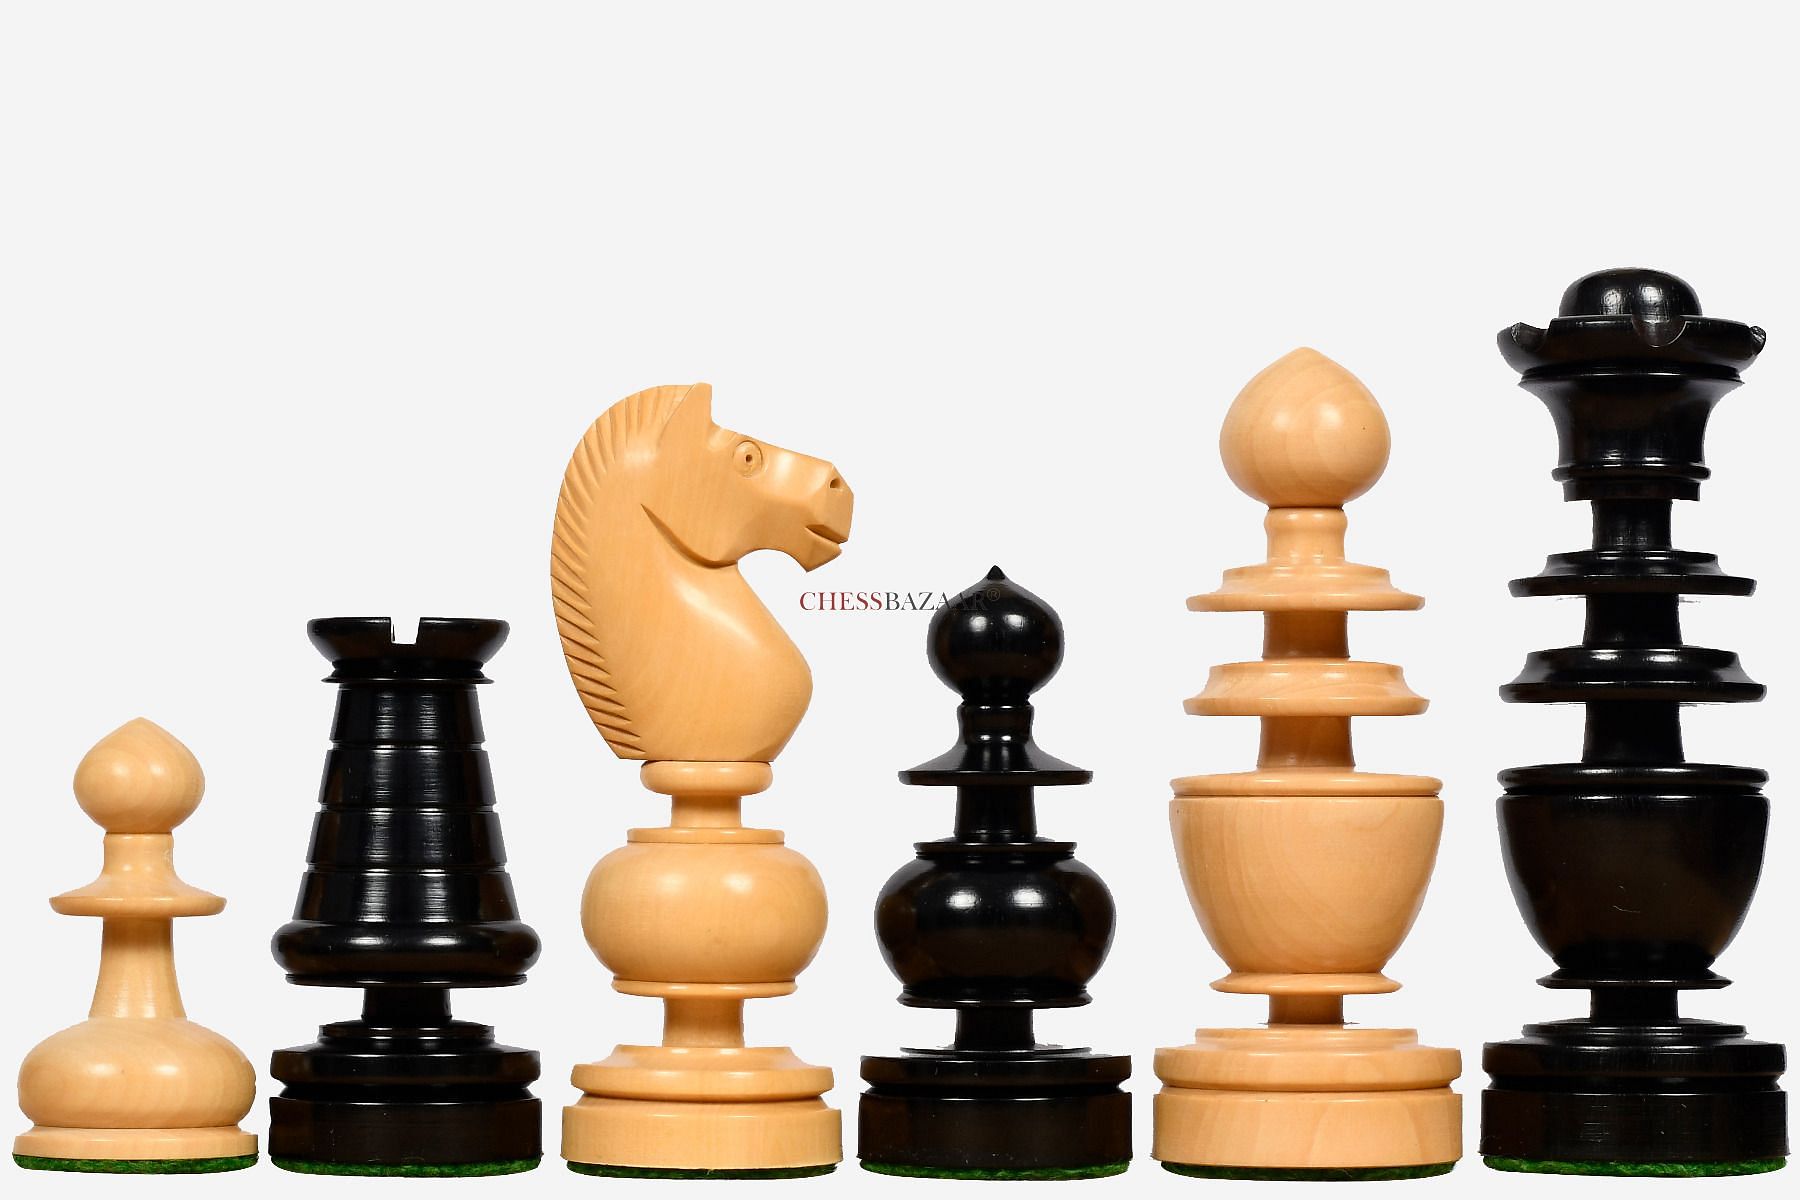 Ornate Chess Sets - Regency Chess - Finest Quality Chess Sets